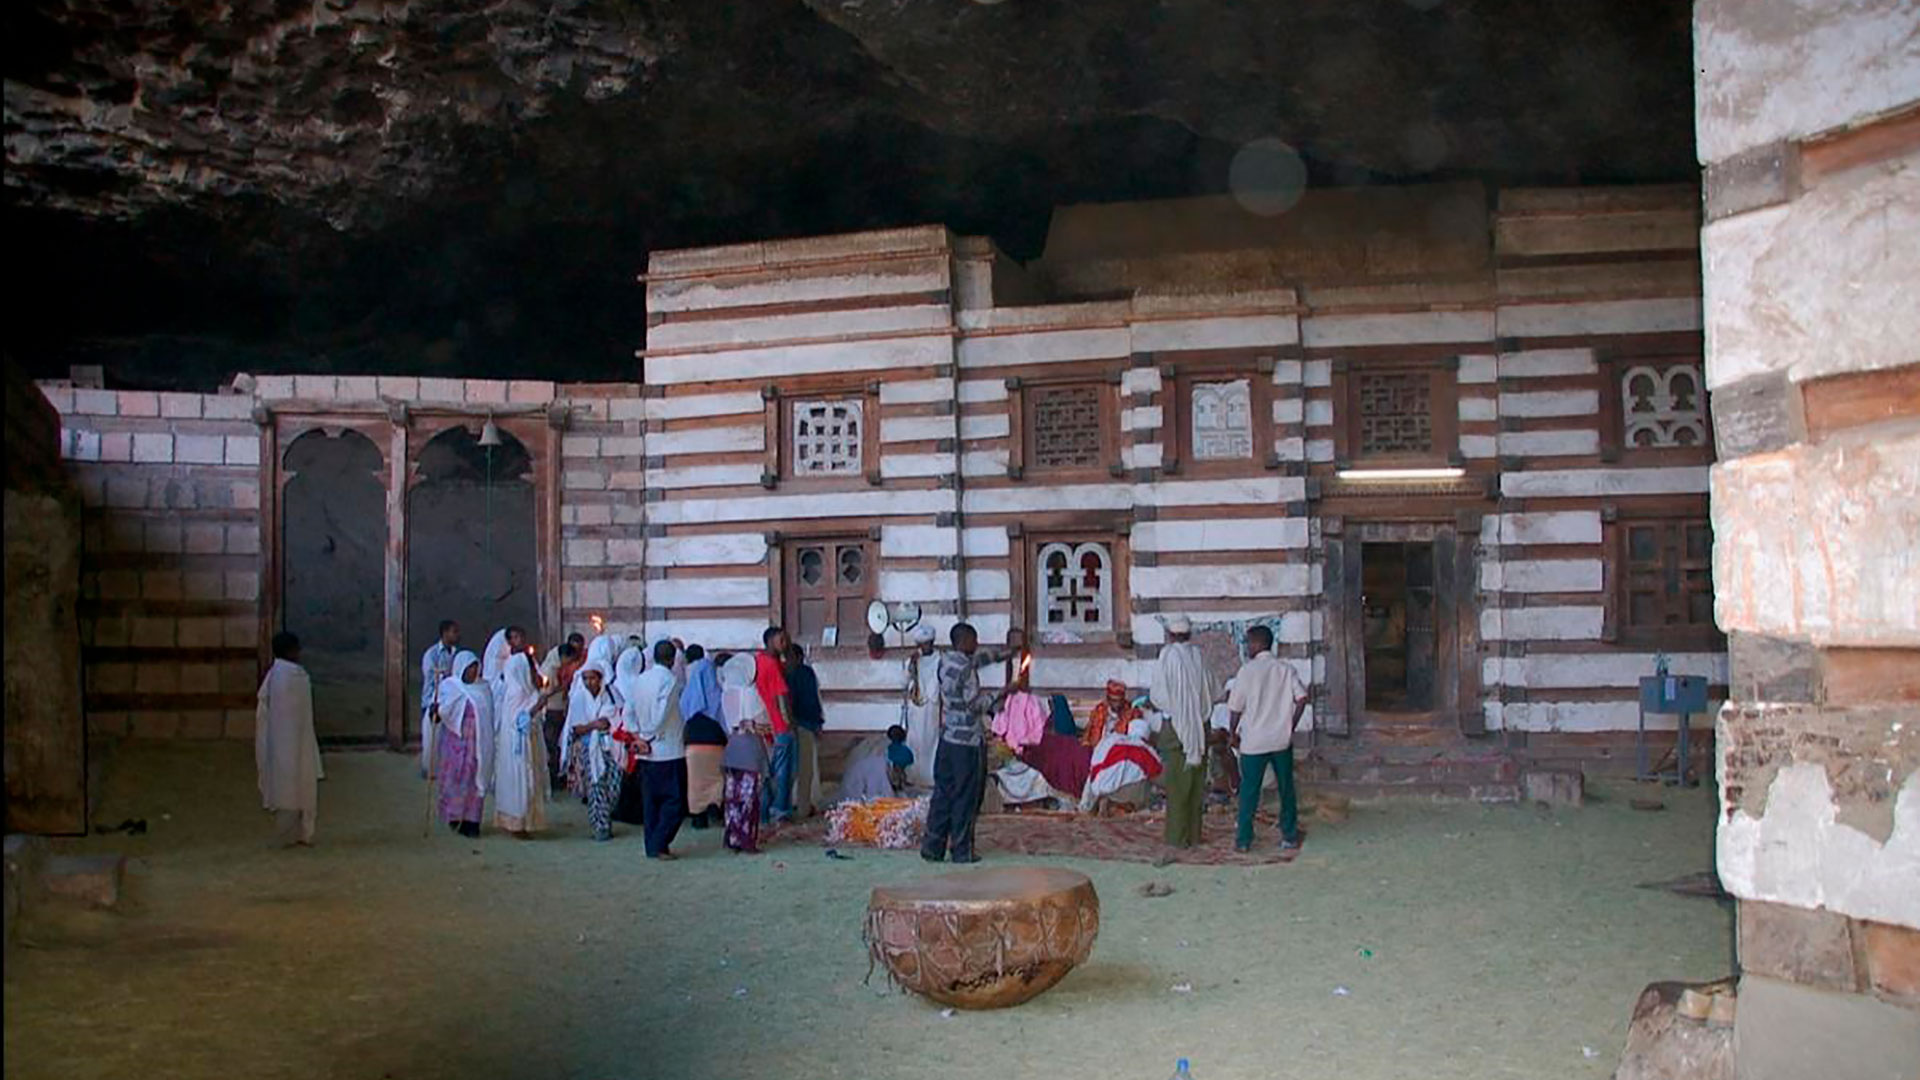 World architecture: the ancient kingdom of Aksum, Ethiopia